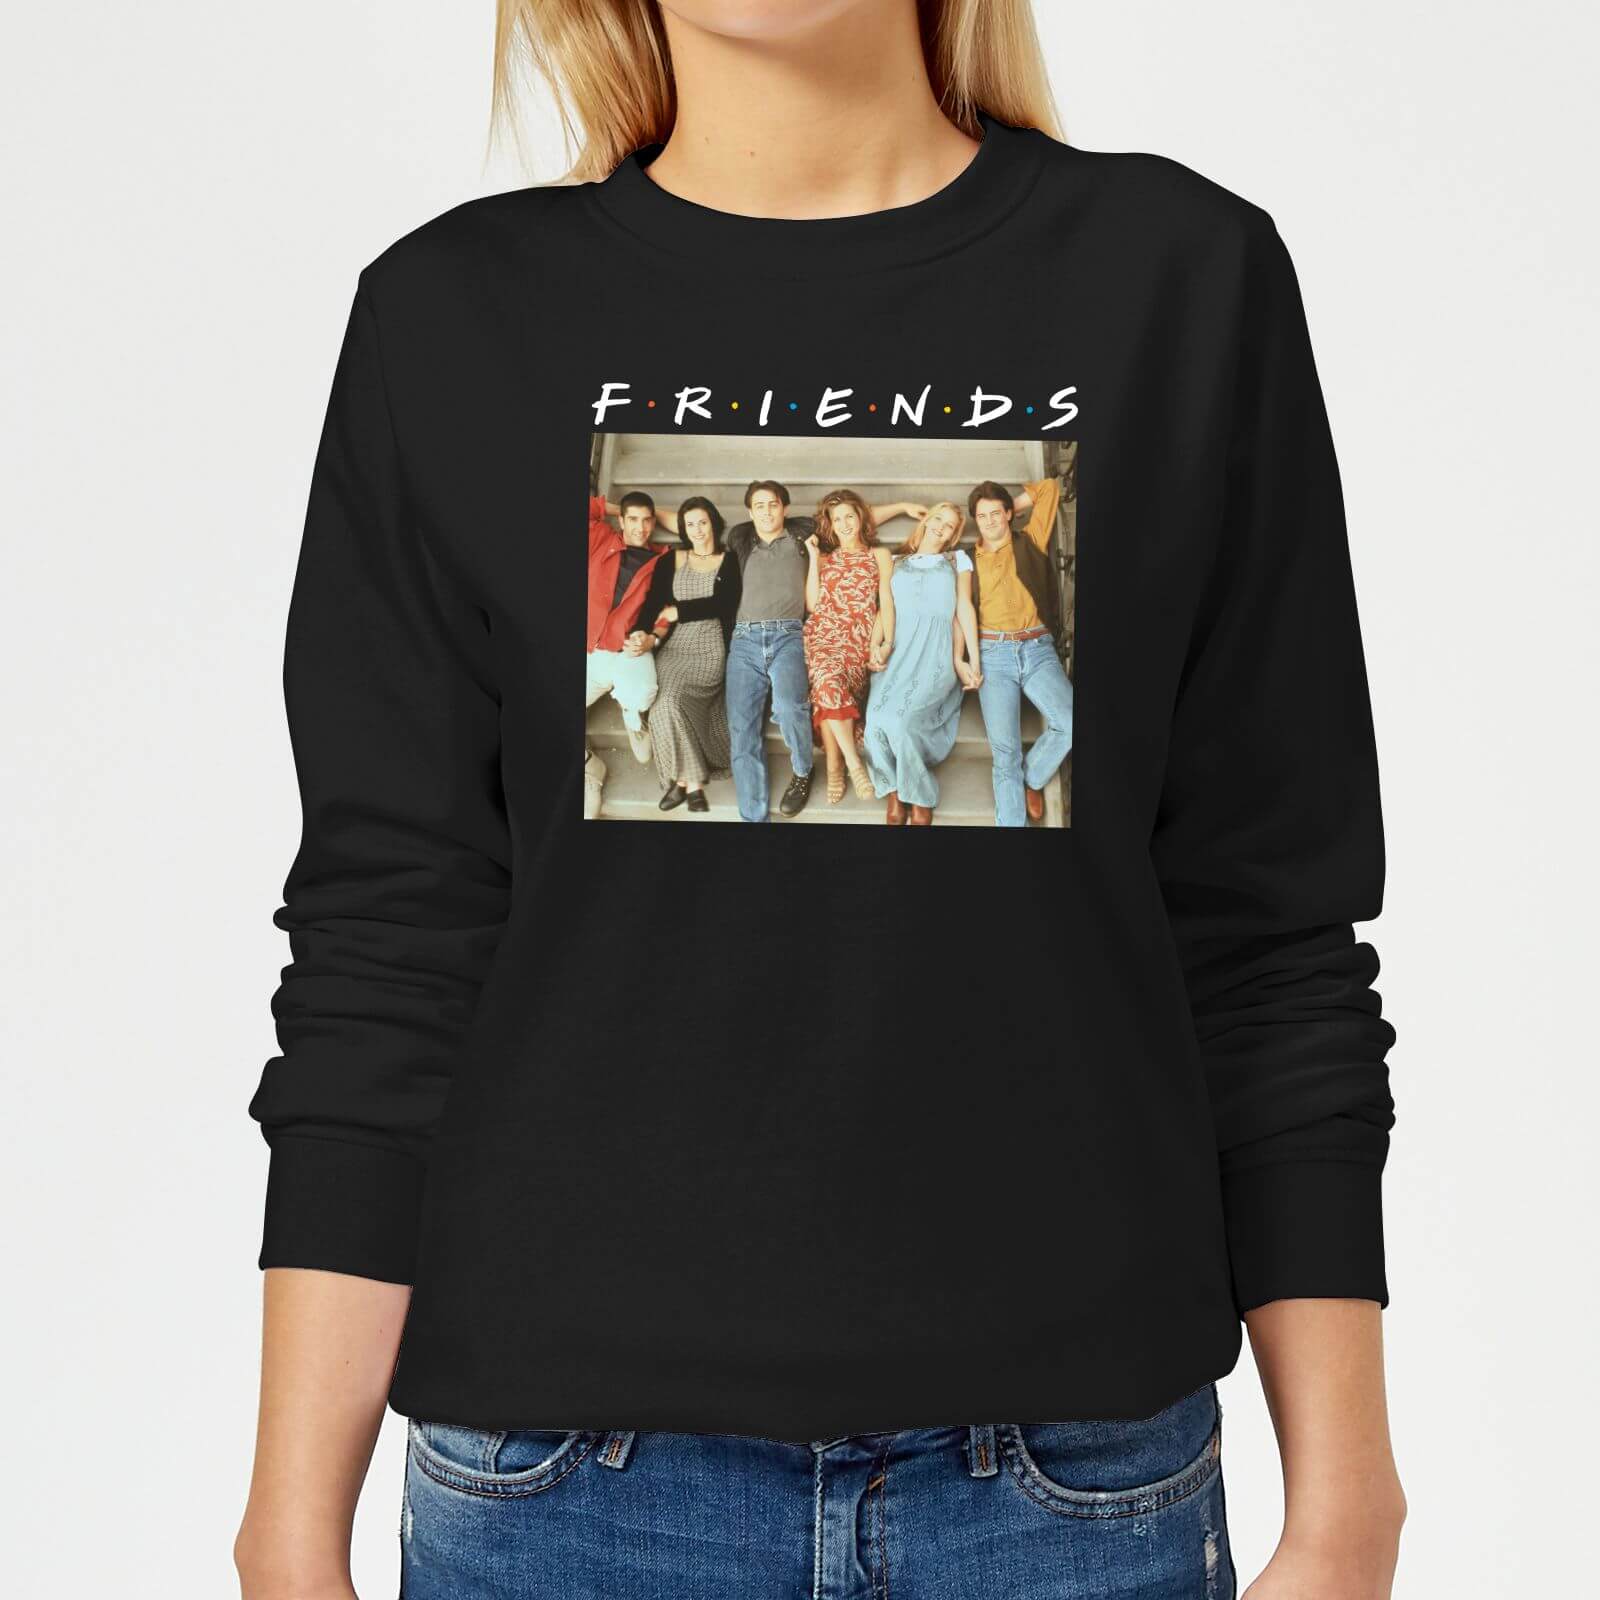 Friends Retro Character Shot Women's Sweatshirt - Black - S - Black